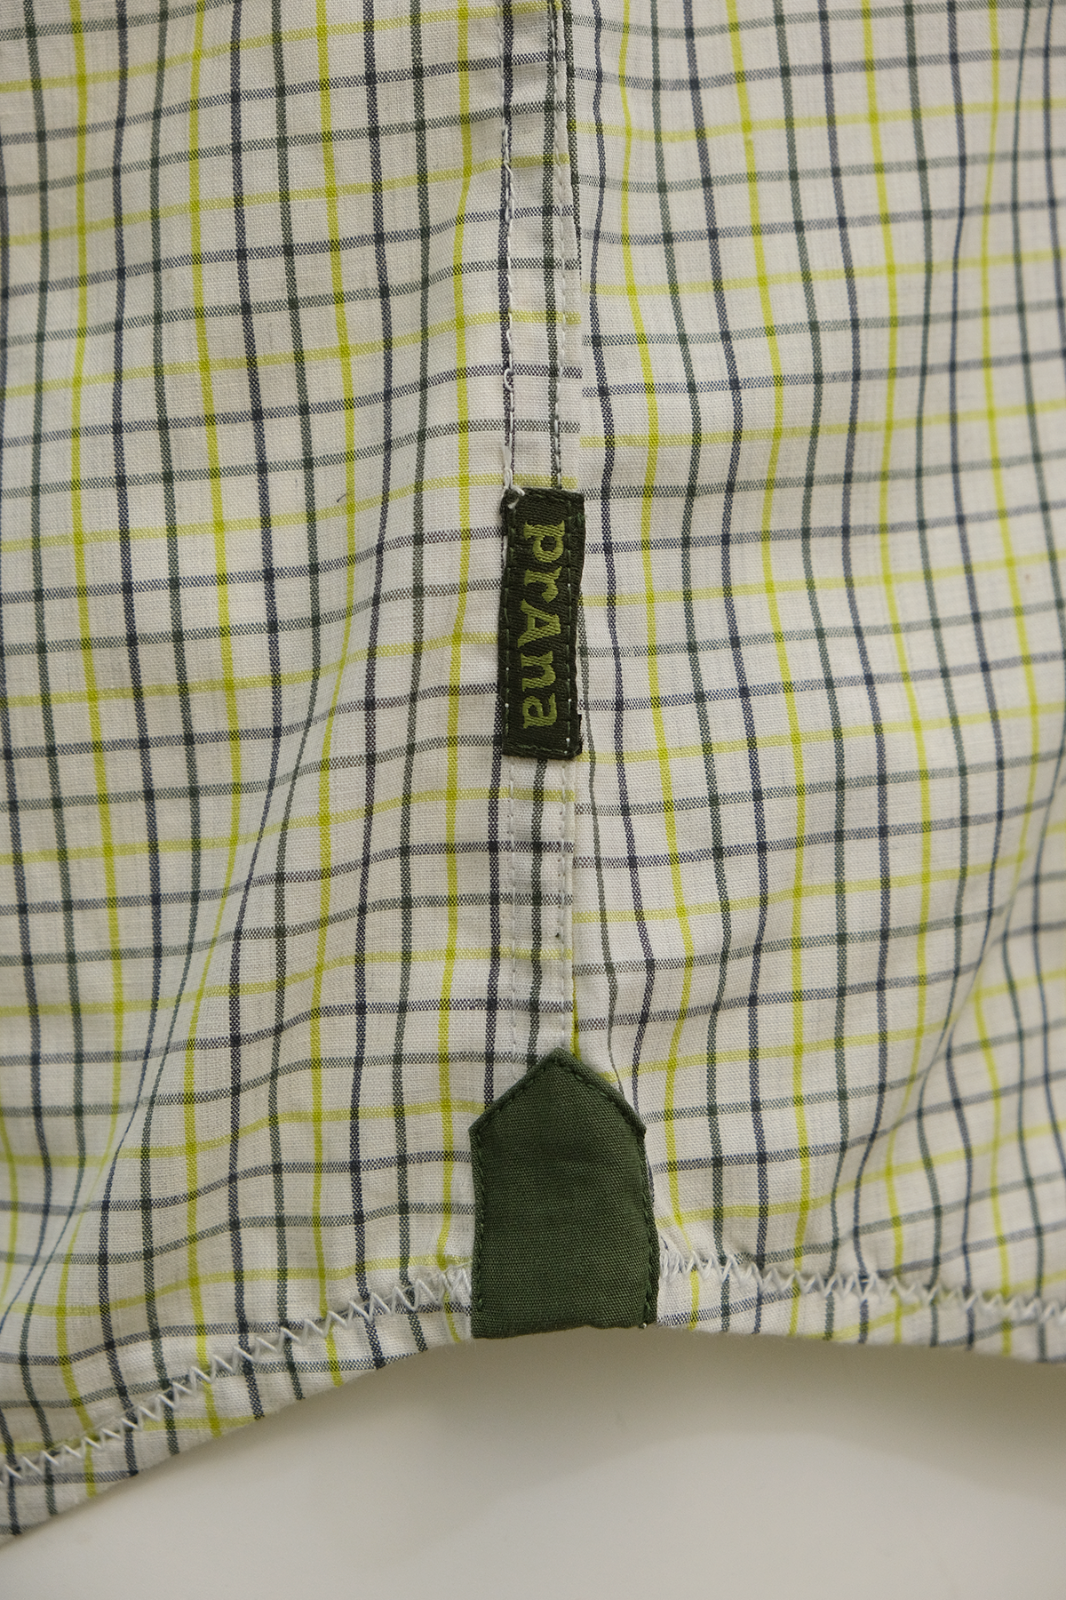 prAna Men's Chartreuse Green Box Plaid S/S Woven Shirt (Slim Fit) S01